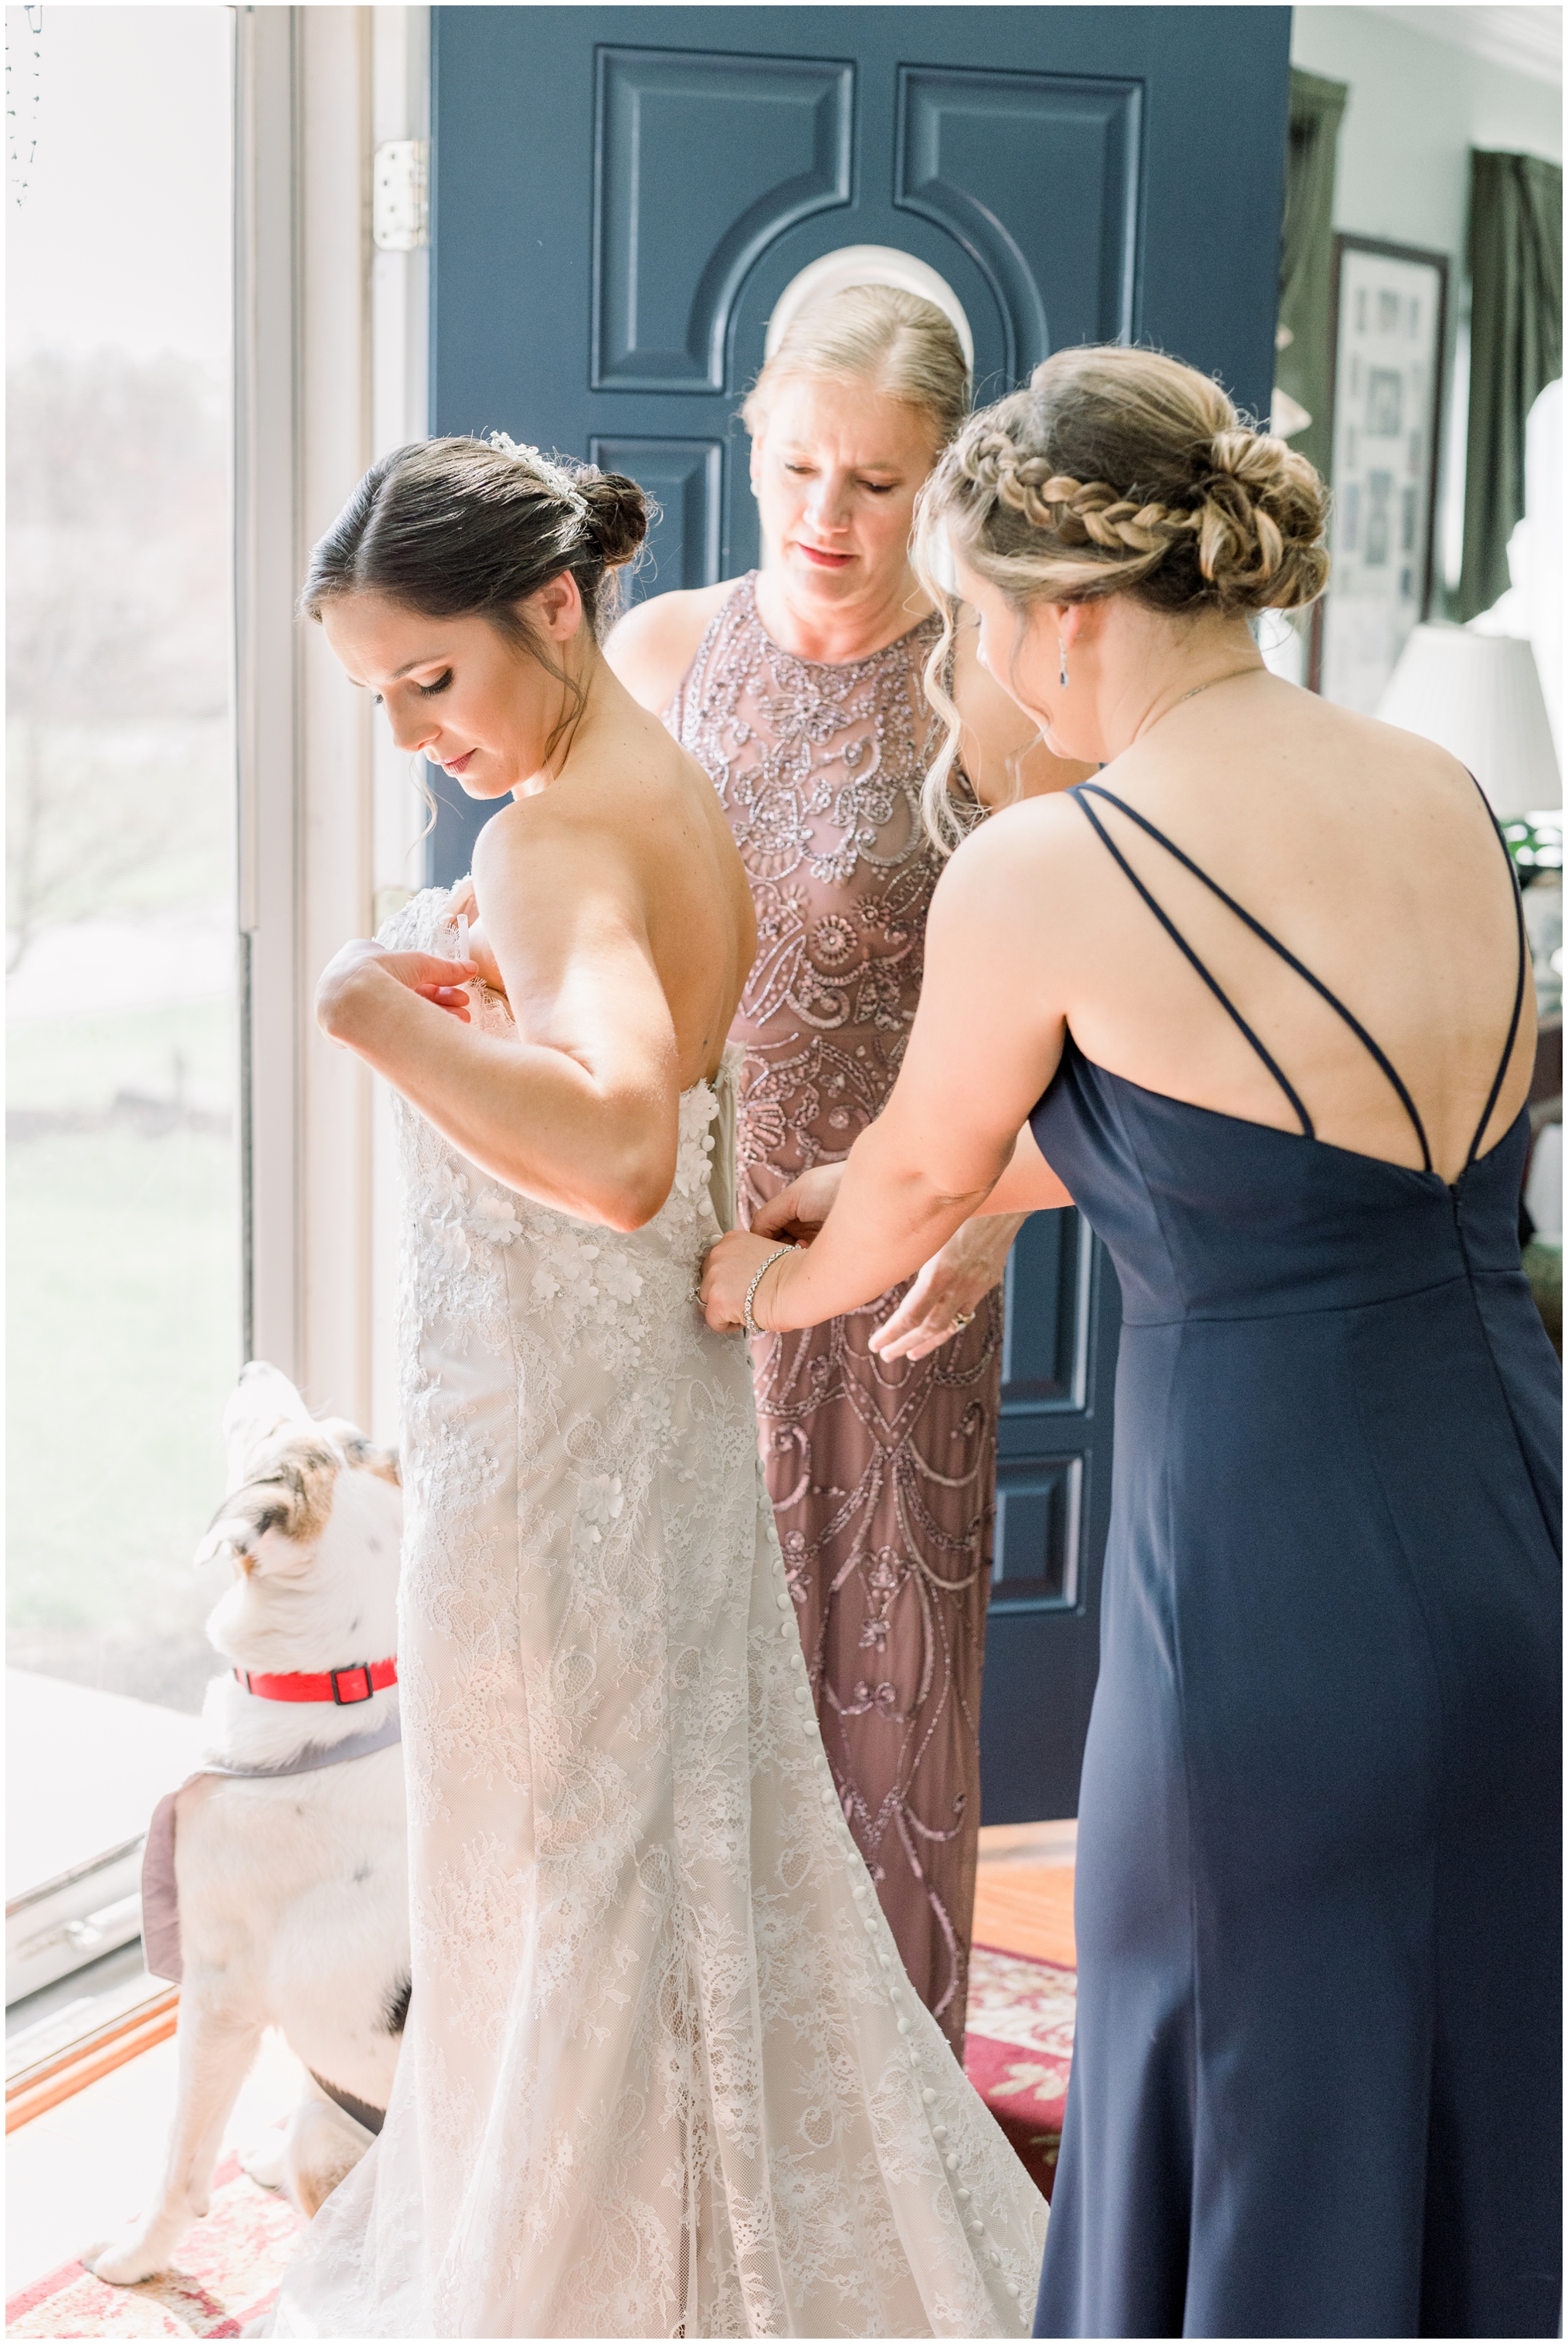 Krista Brackin Photography | April Wedding at The Carriage House at Rockwood Park_0014.jpg